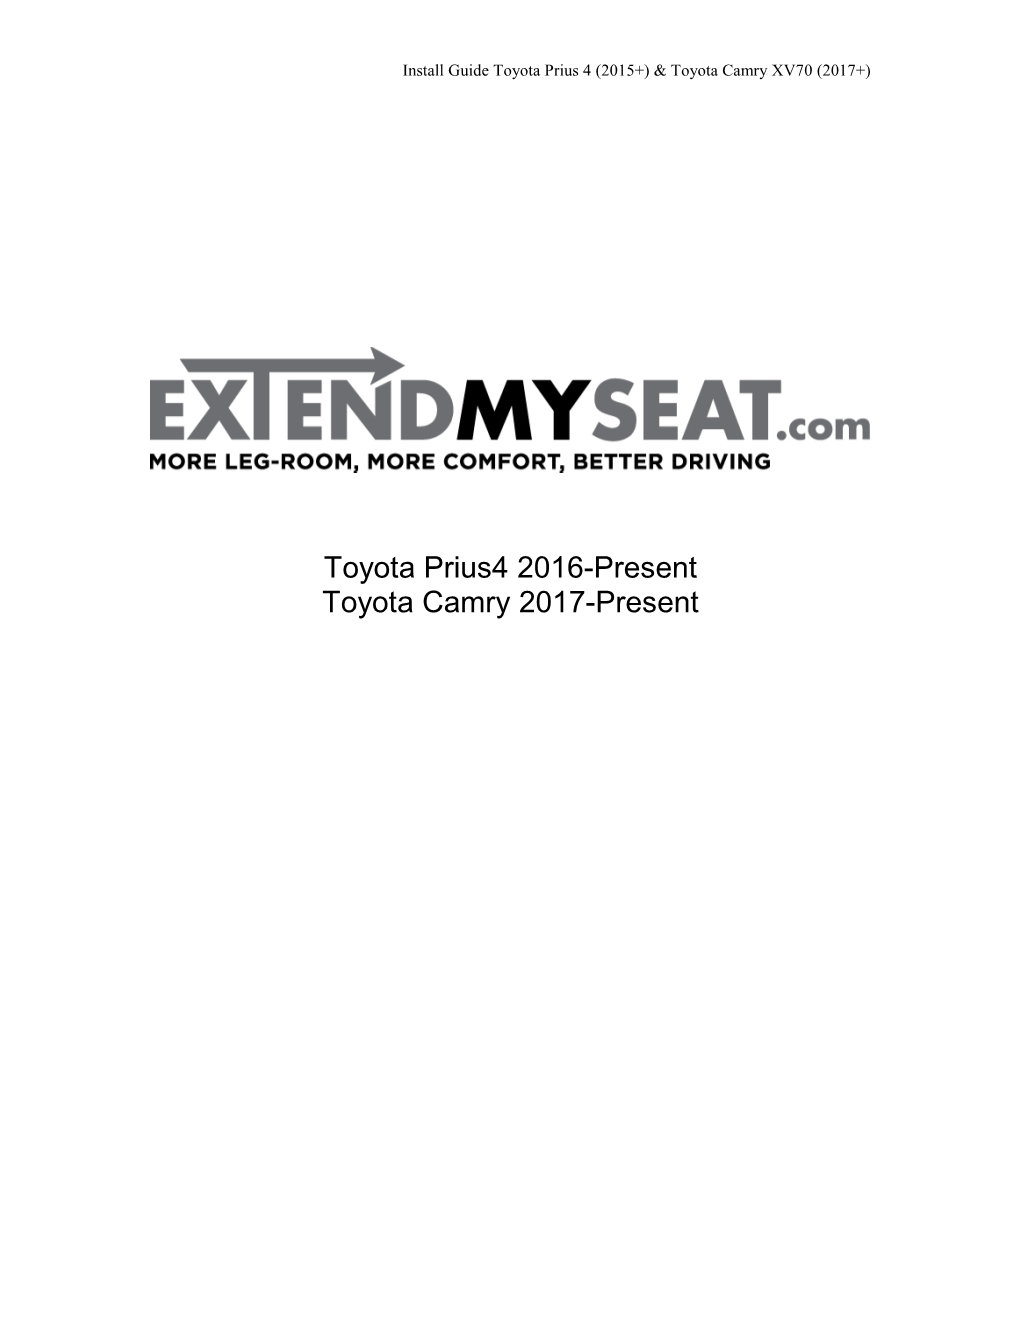 Toyota Camry XV70 (2017+)